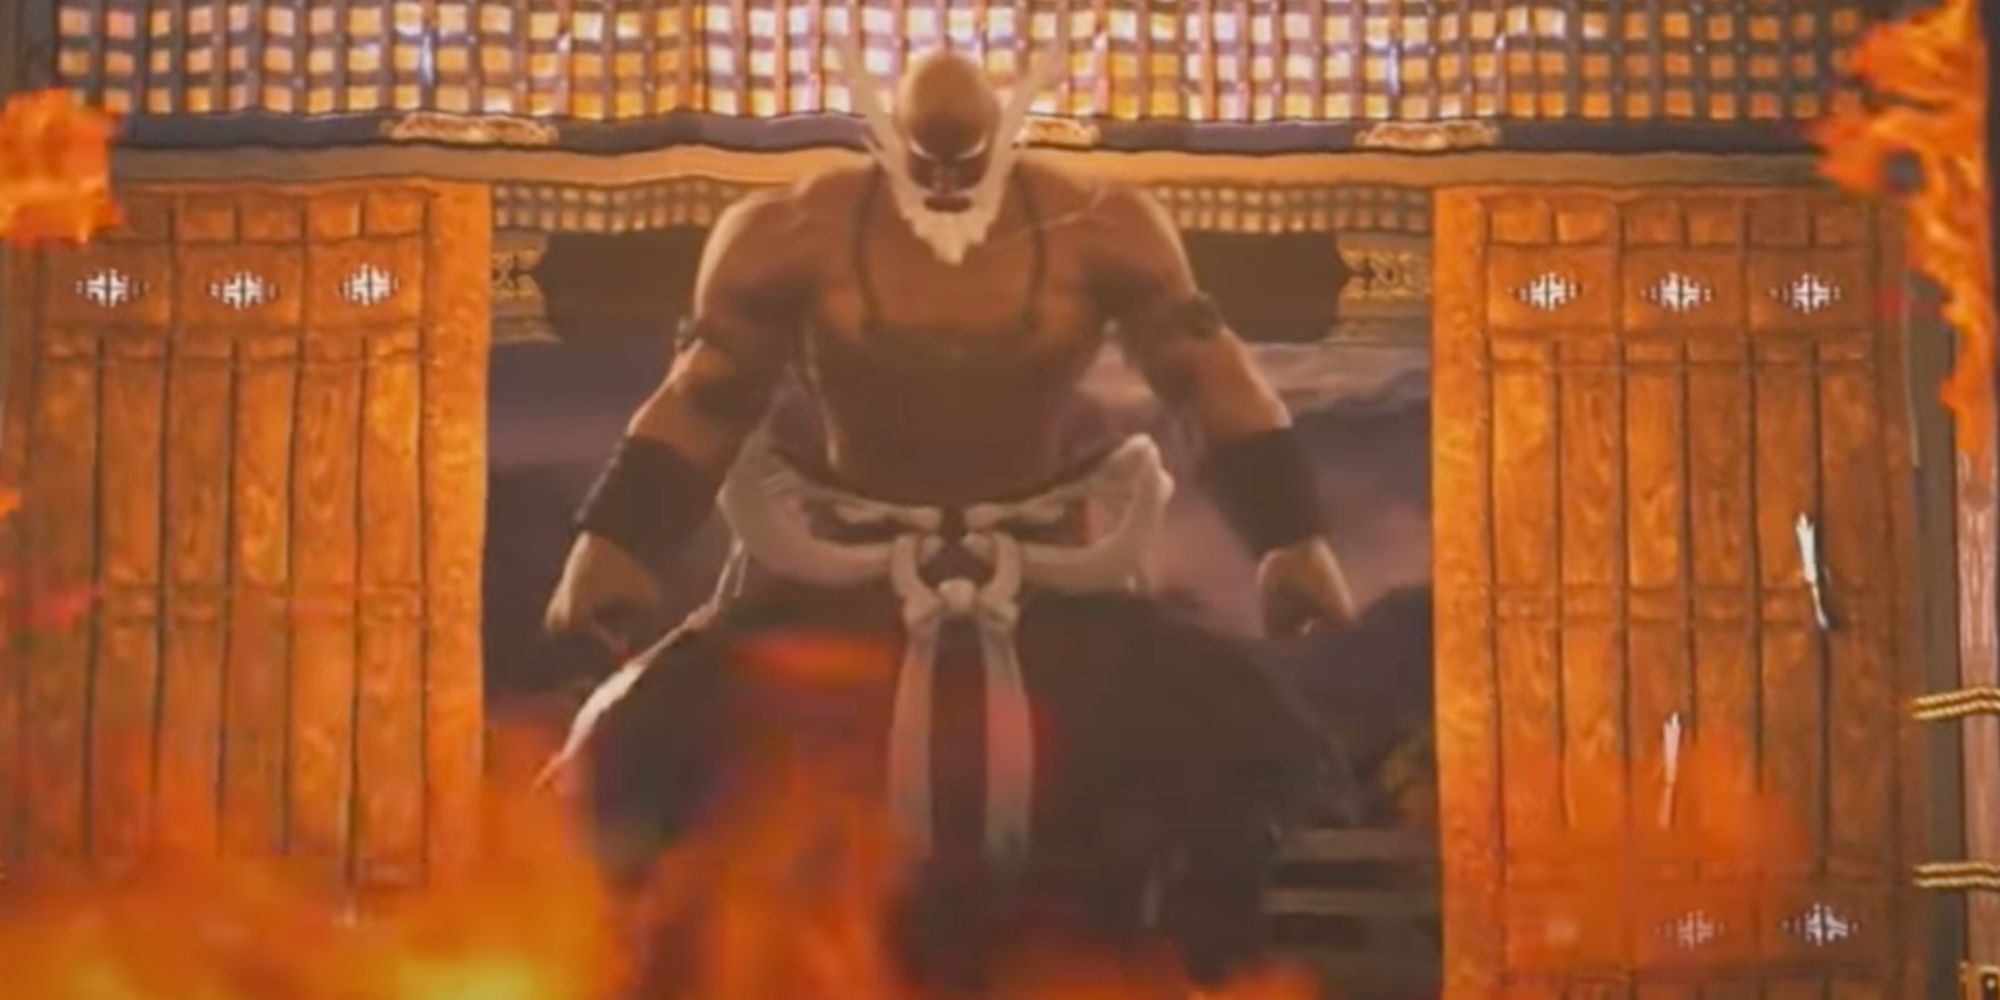 Jinpachi Mishima from the Tekken series